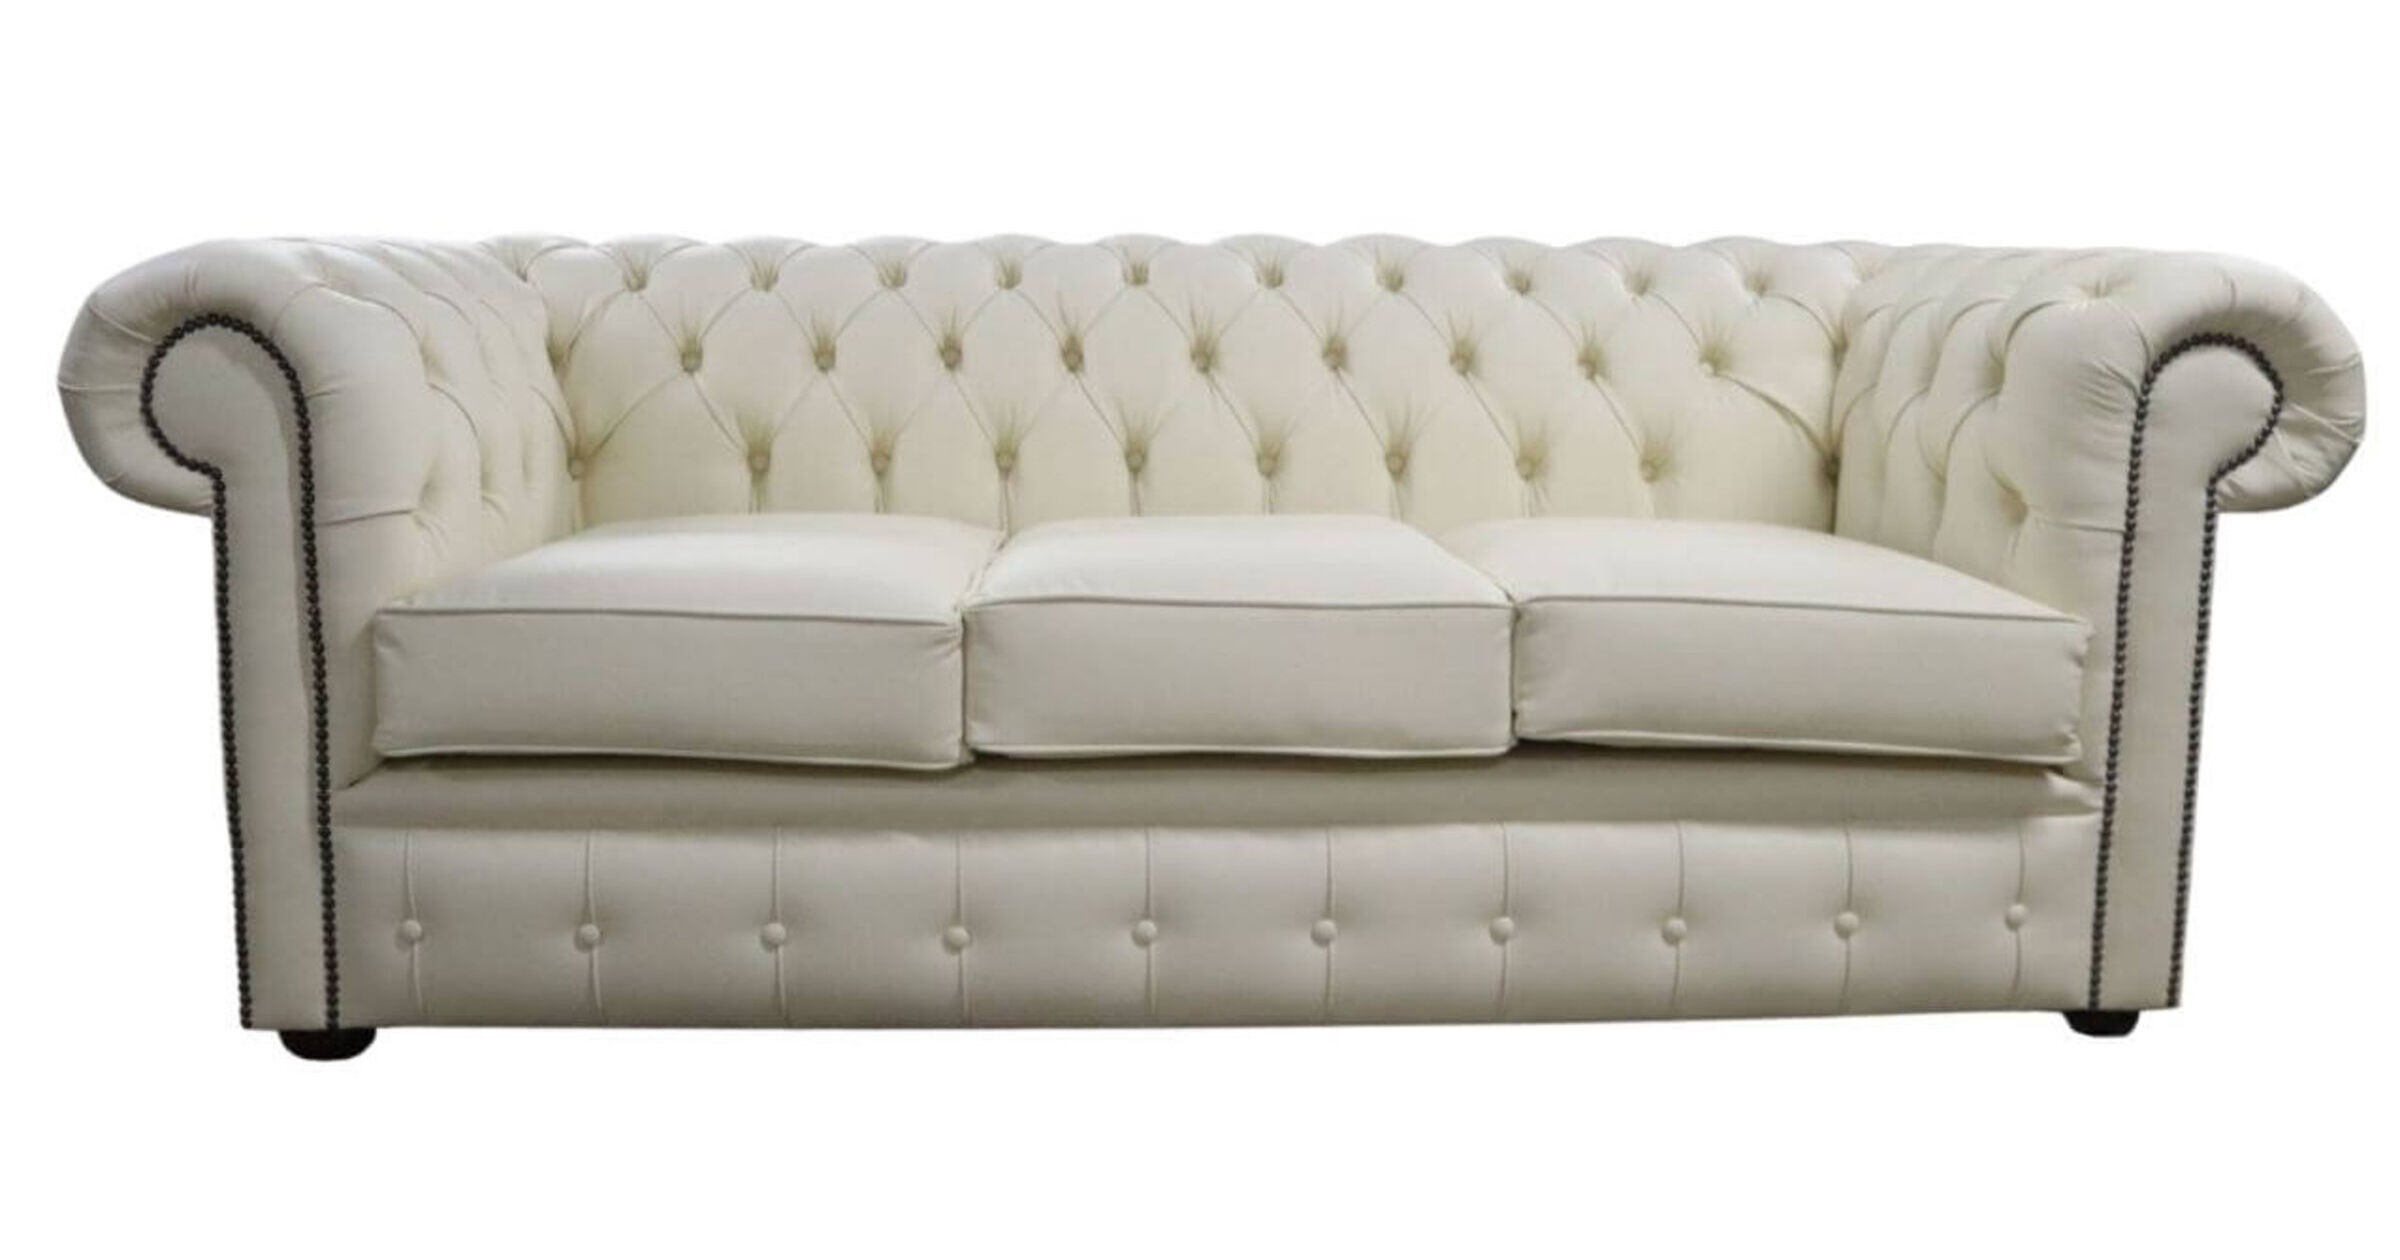 cream leather chesterfield sofa uk